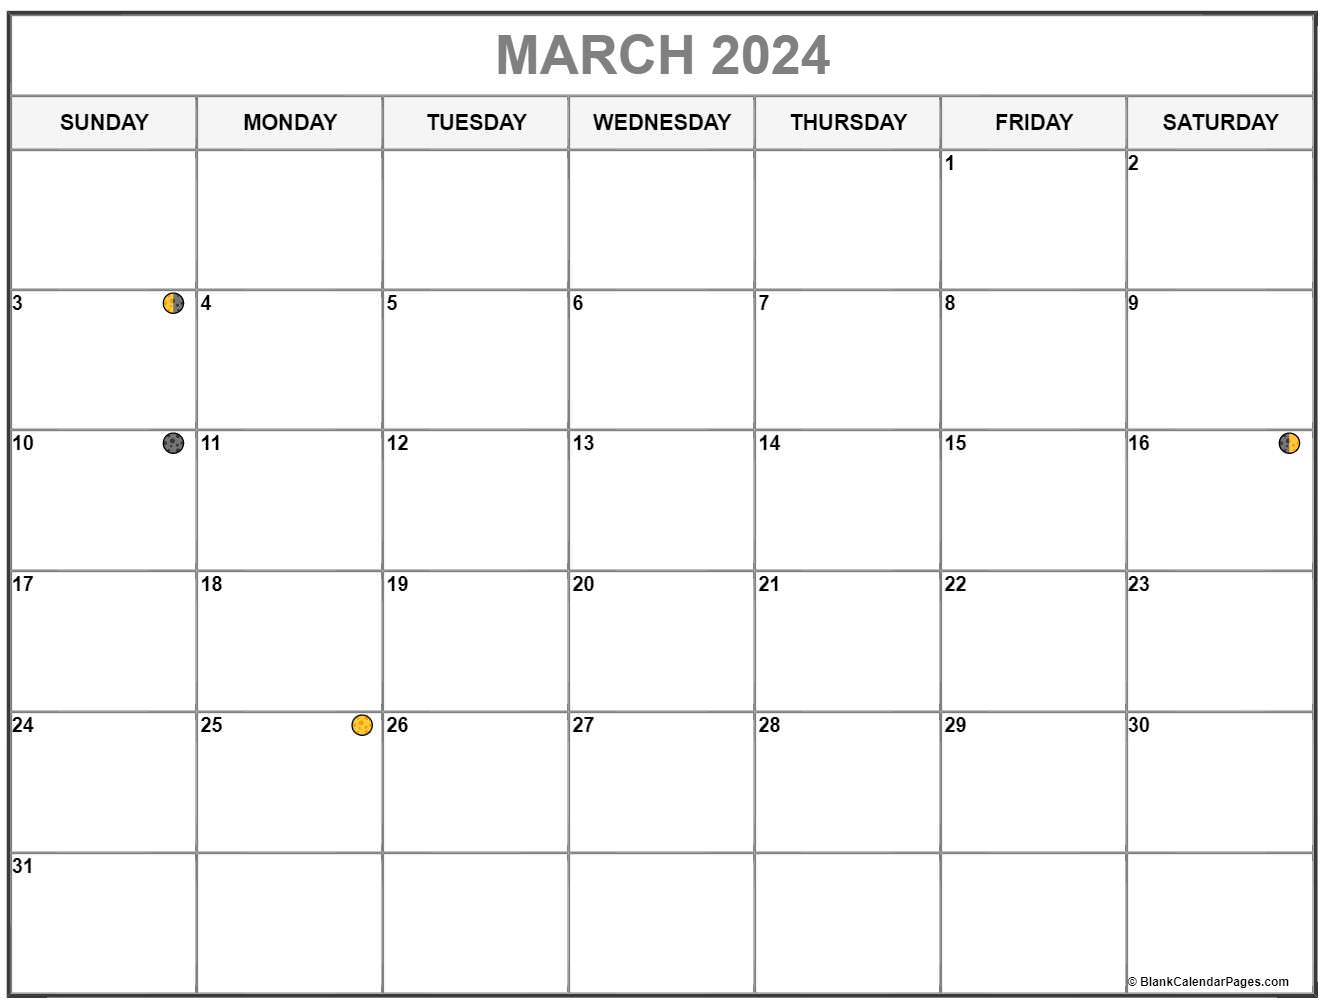 march-2023-lunar-calendar-moon-phase-calendar